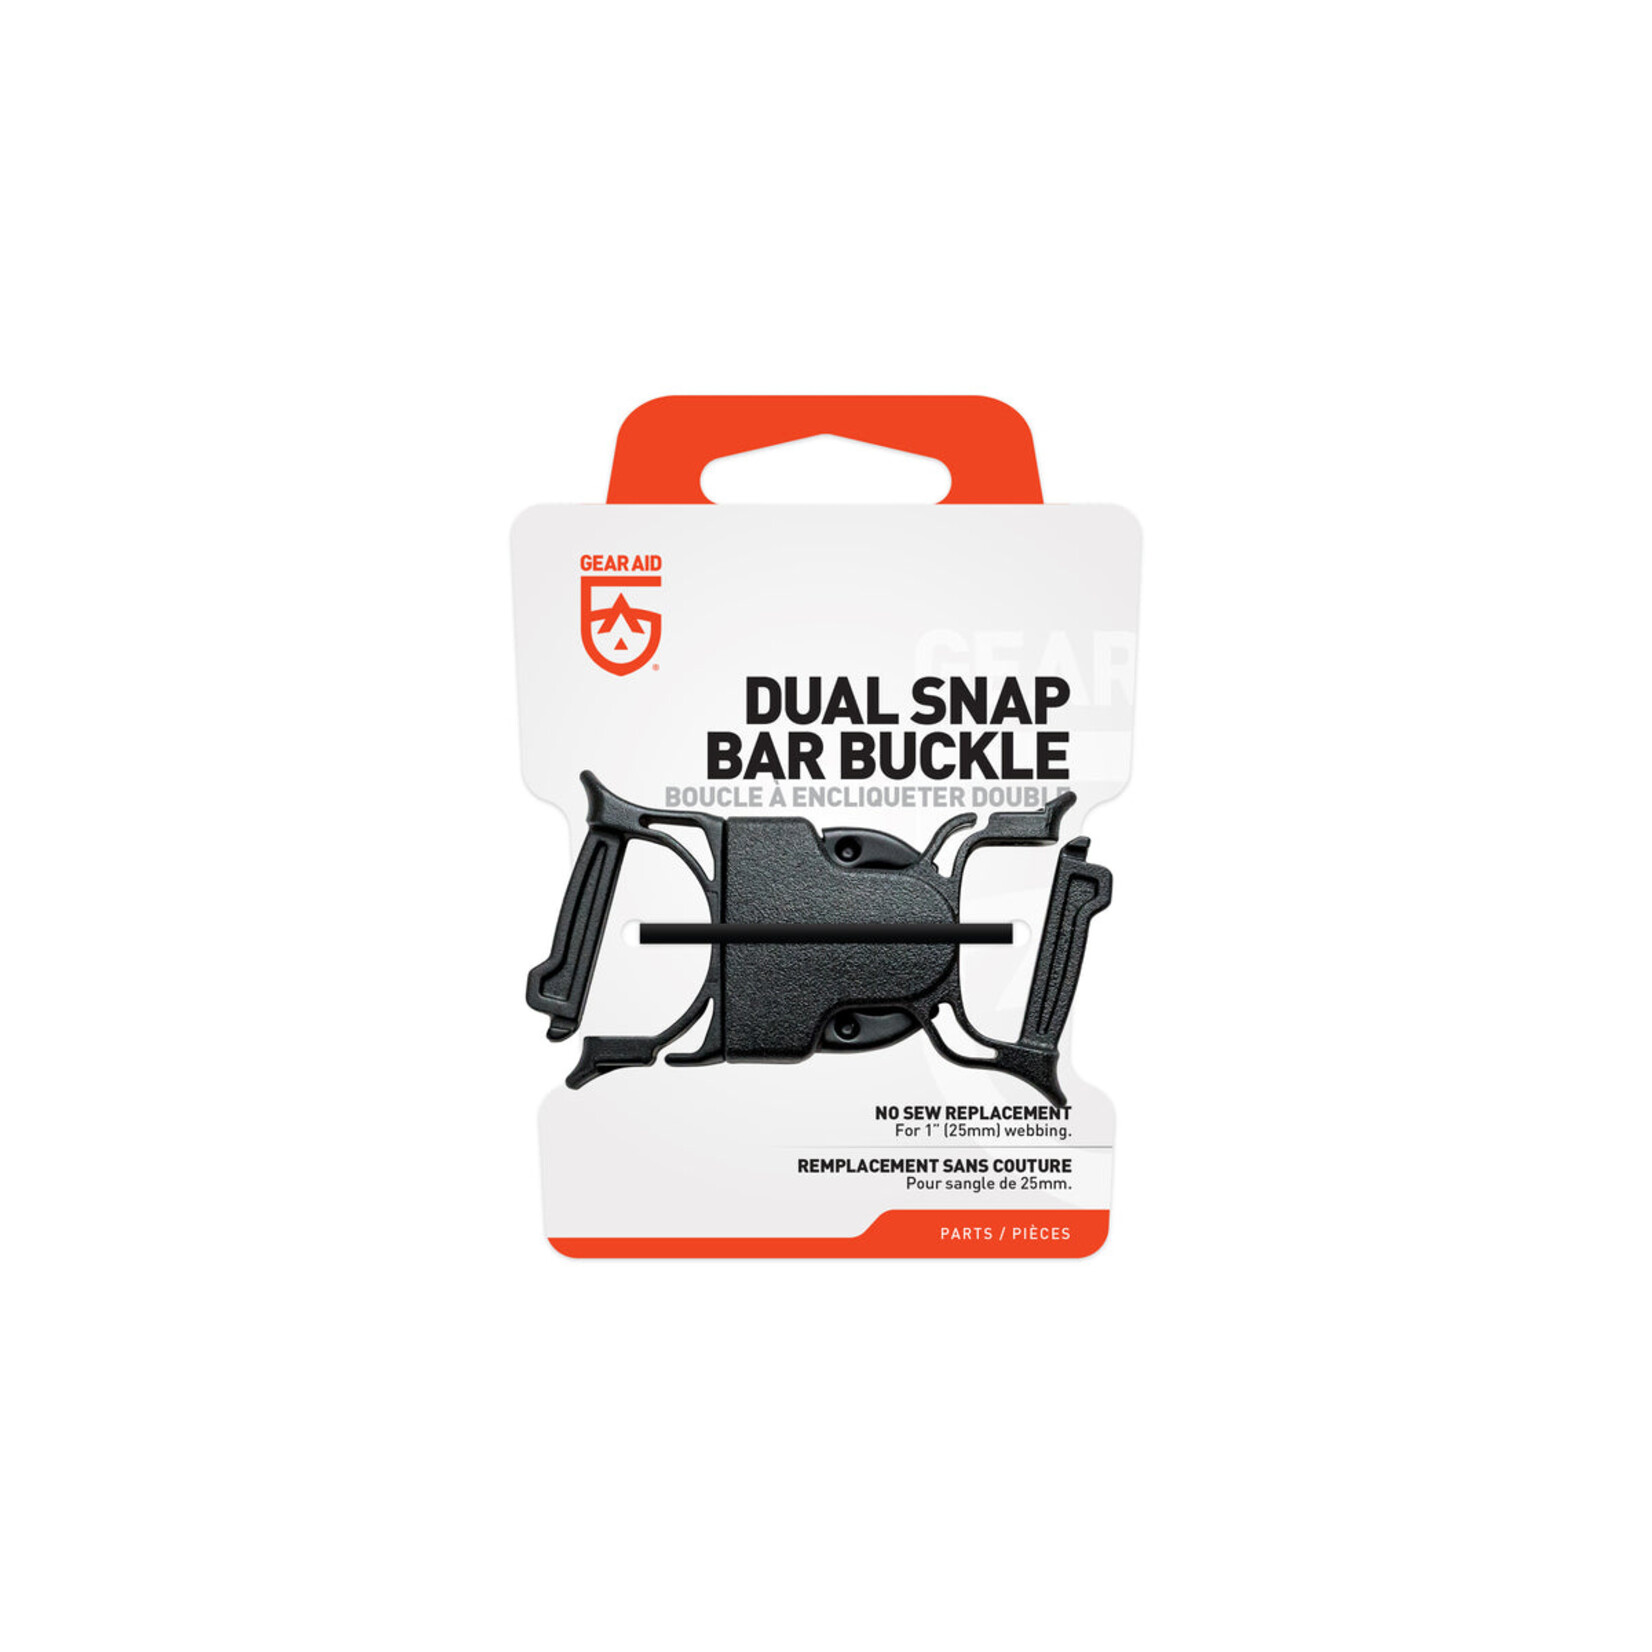 Gear Aid Dual Snap Bar Buckle 1 in